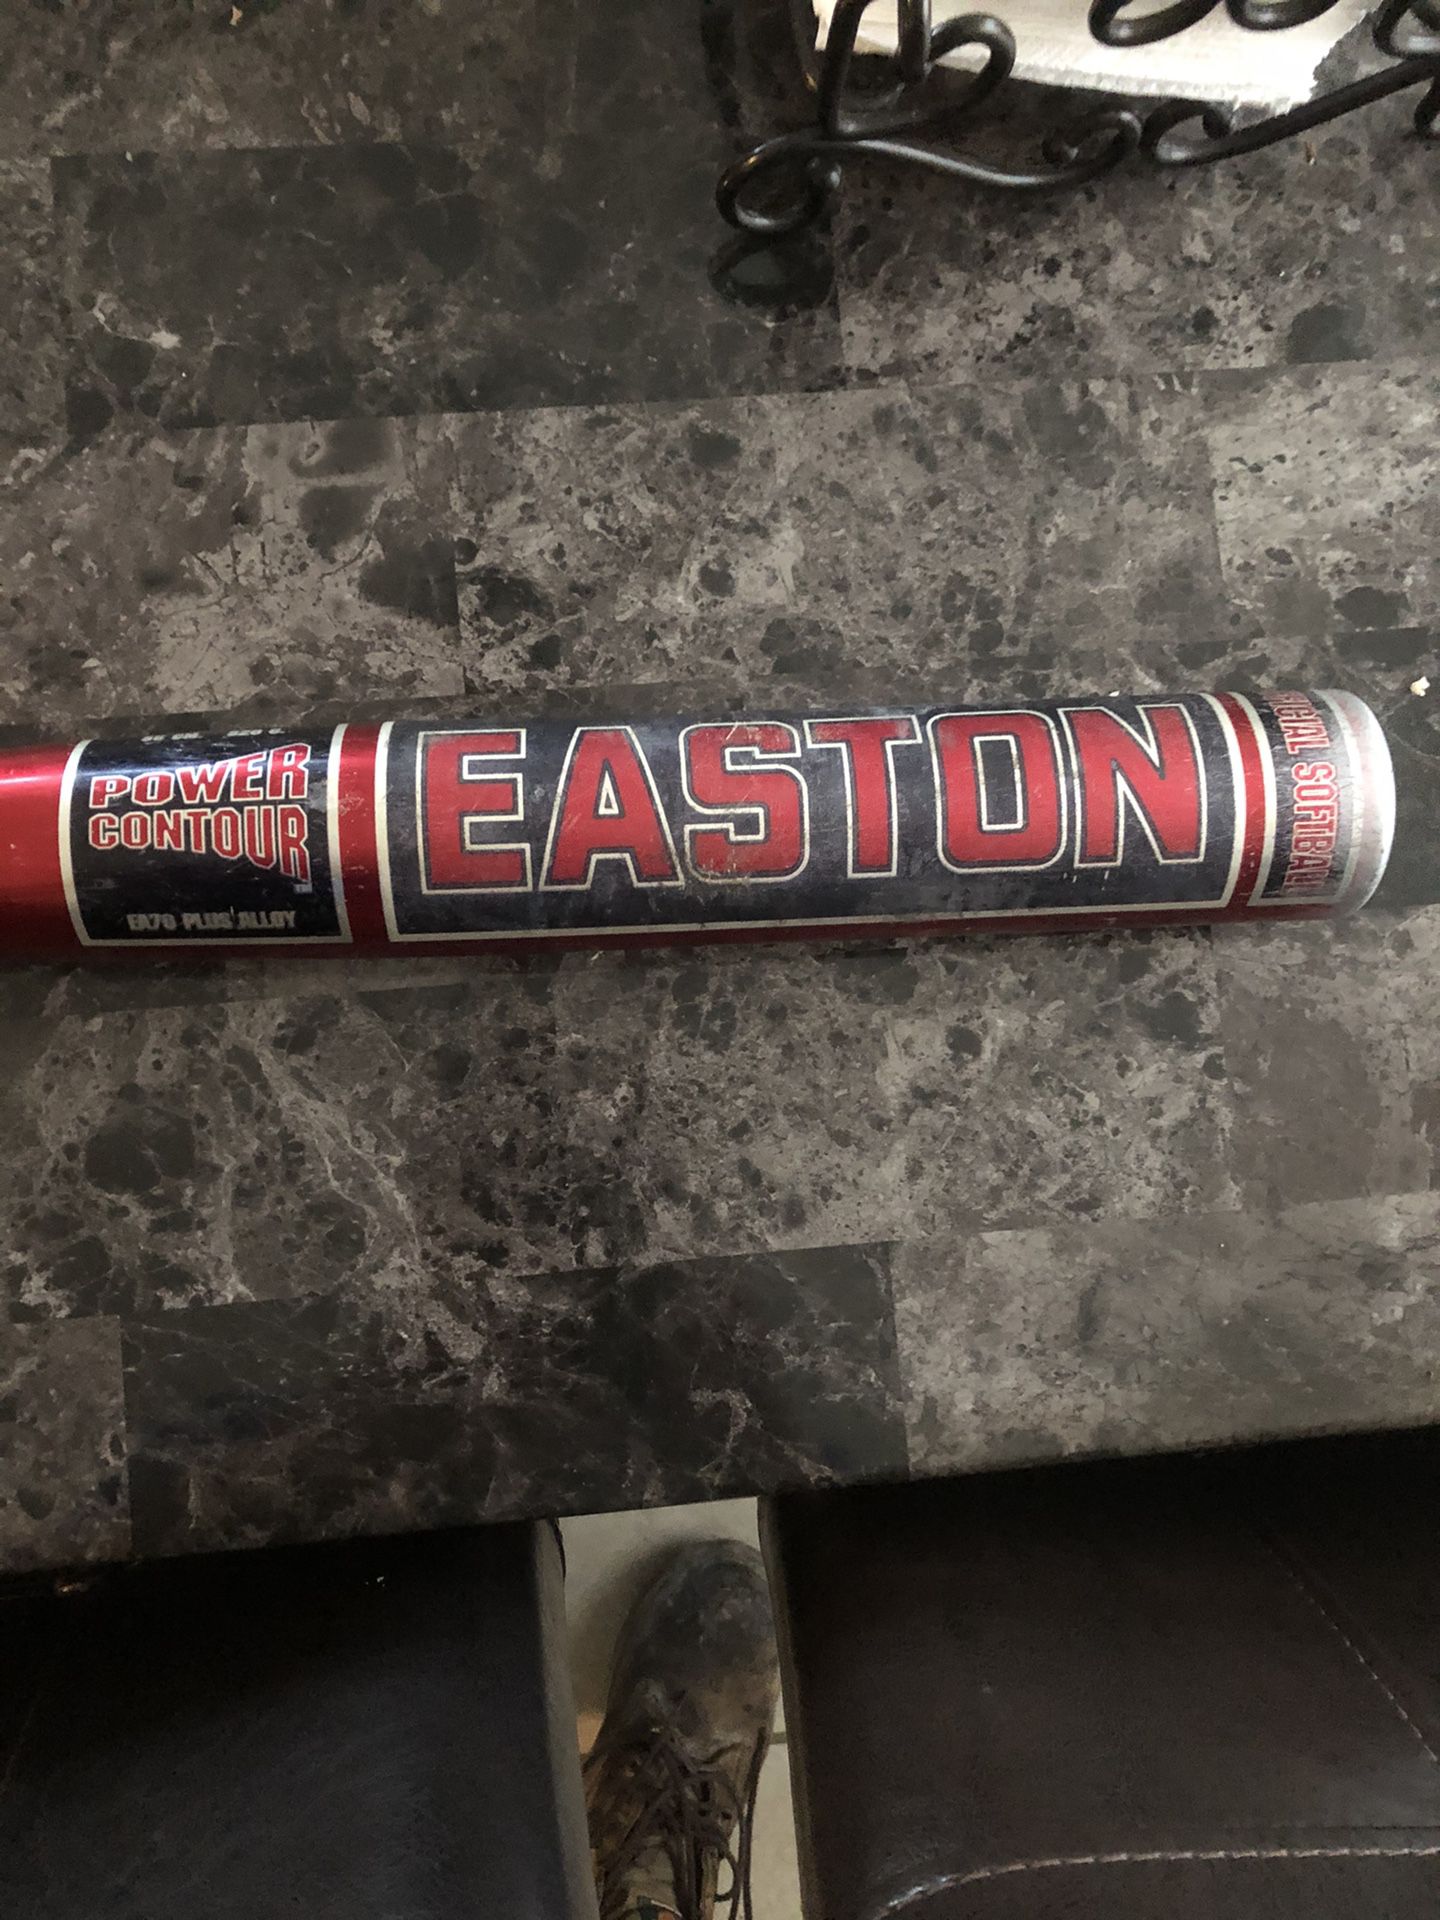 Easton power contour baseball bat size 34in / 29 oz